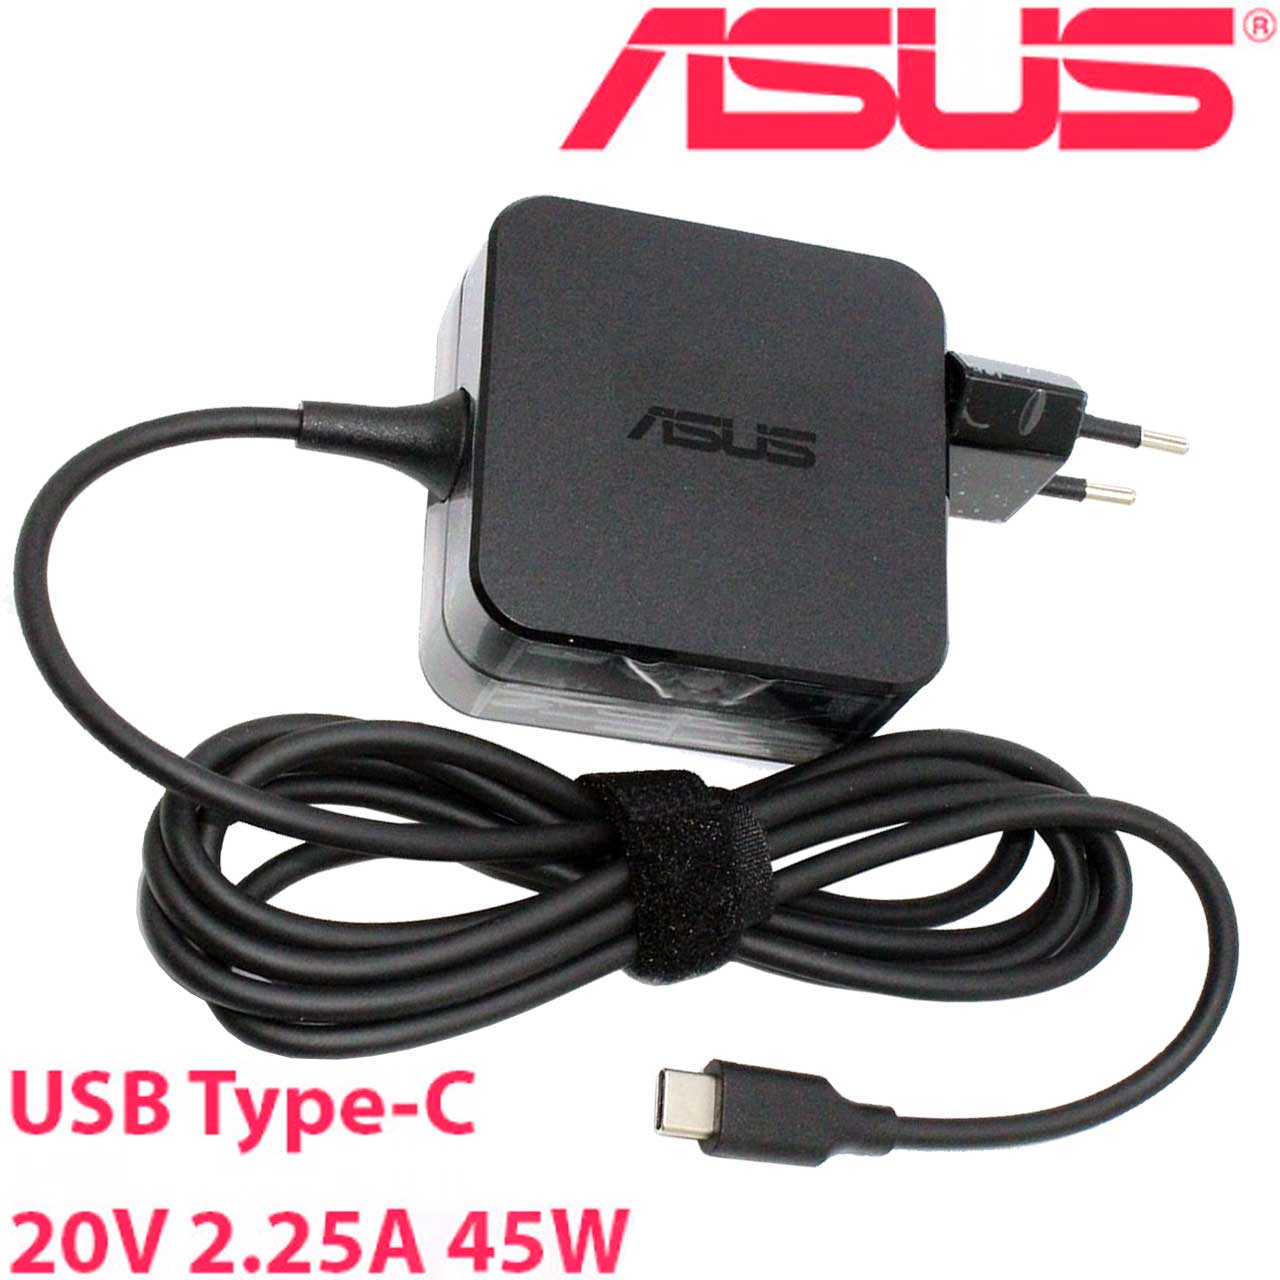 شارژر لپتاپ ایسوس 20V 2.25A مربعی اورجینال USB Type-C